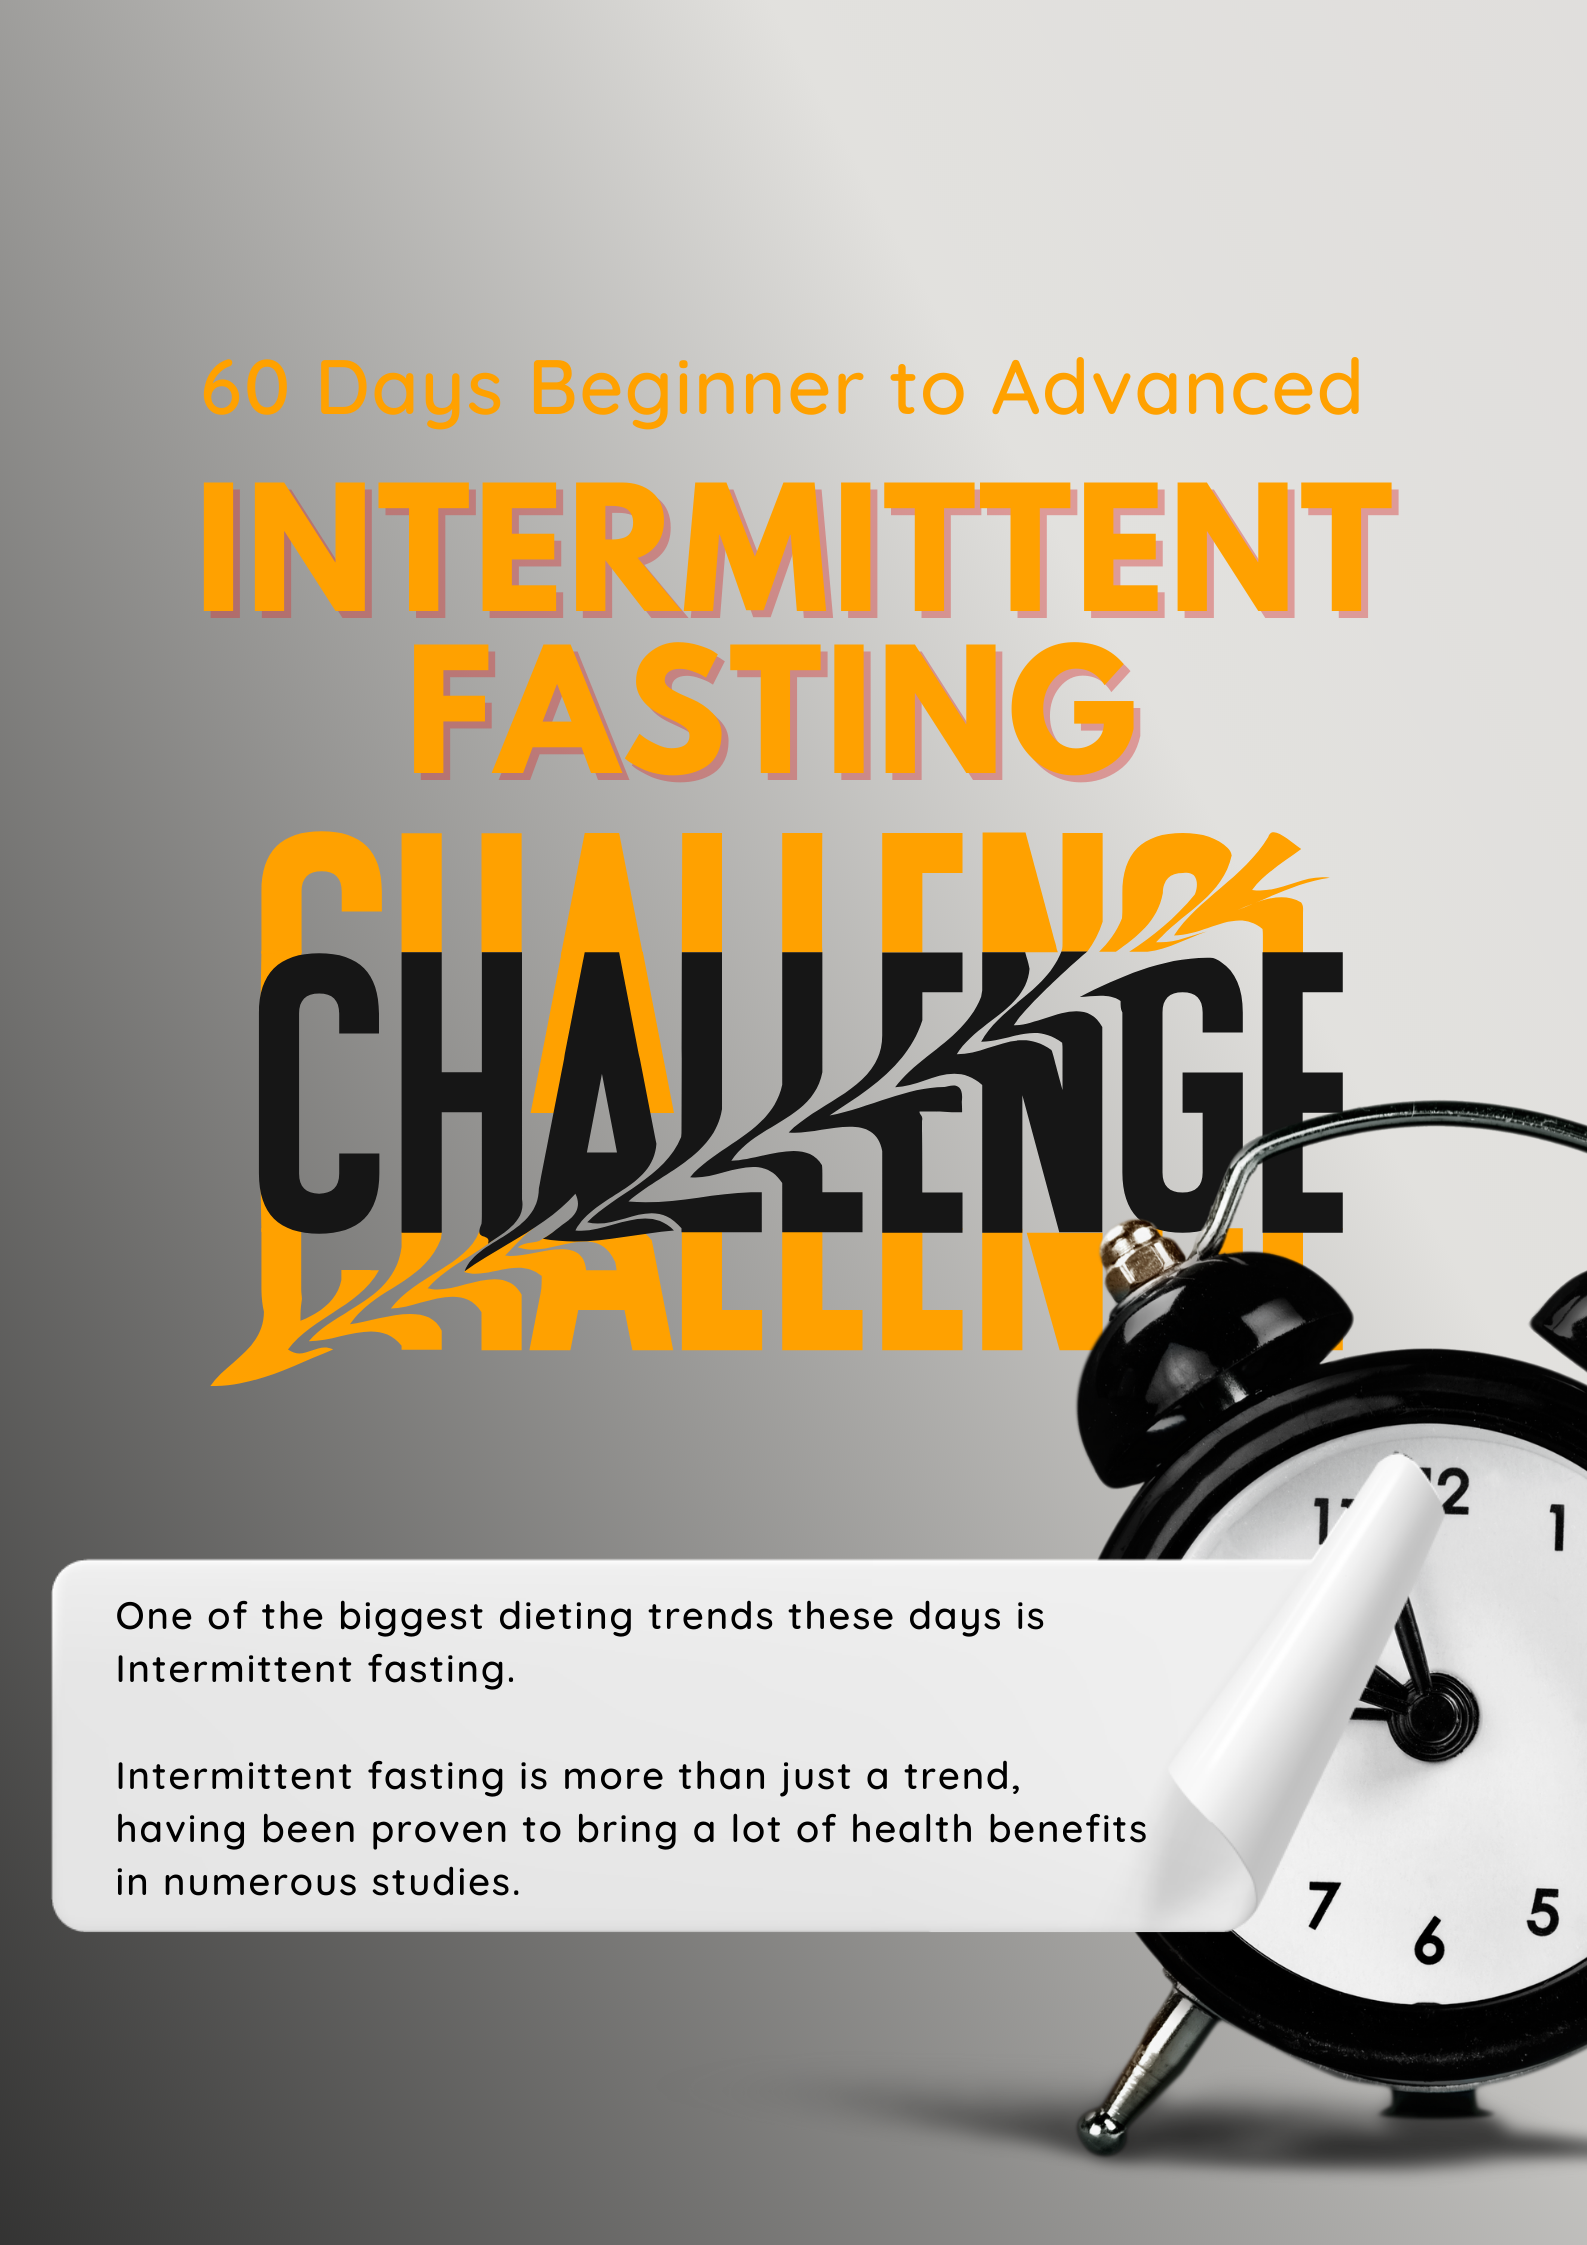 60-day Beginner-Advanced Intermittent Fasting Challenge